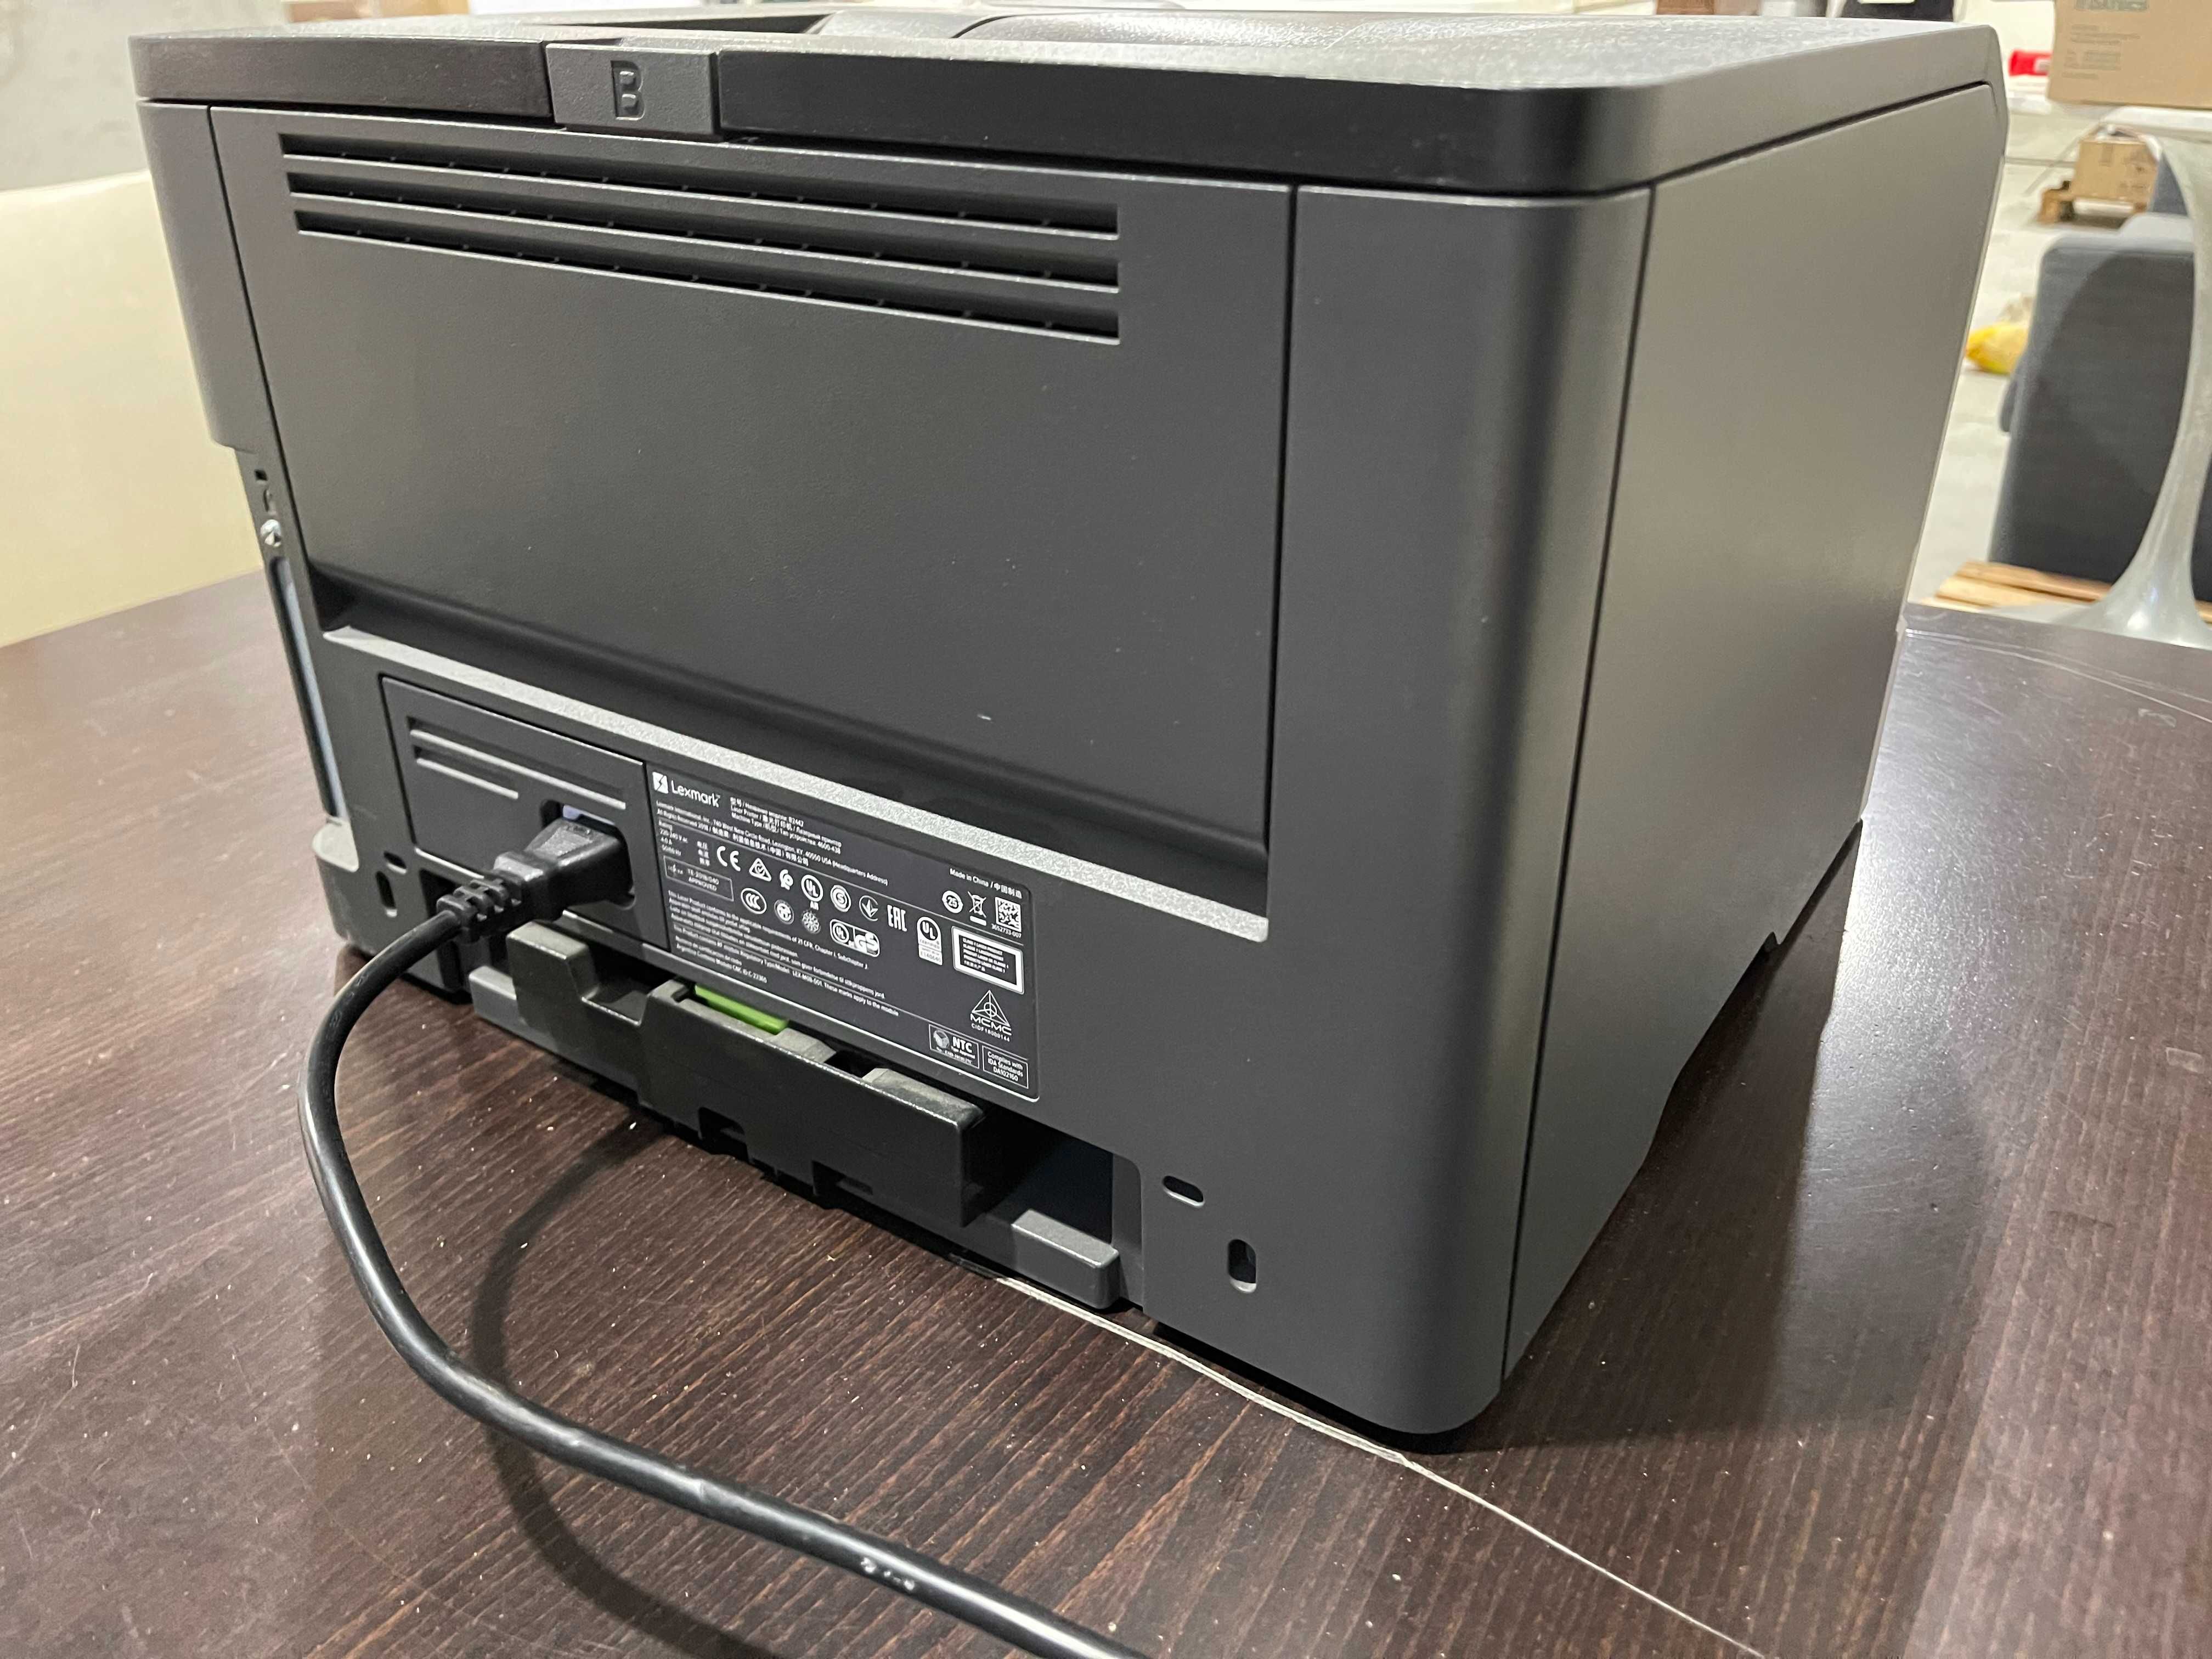 Лазерен принтер Lexmark B2442